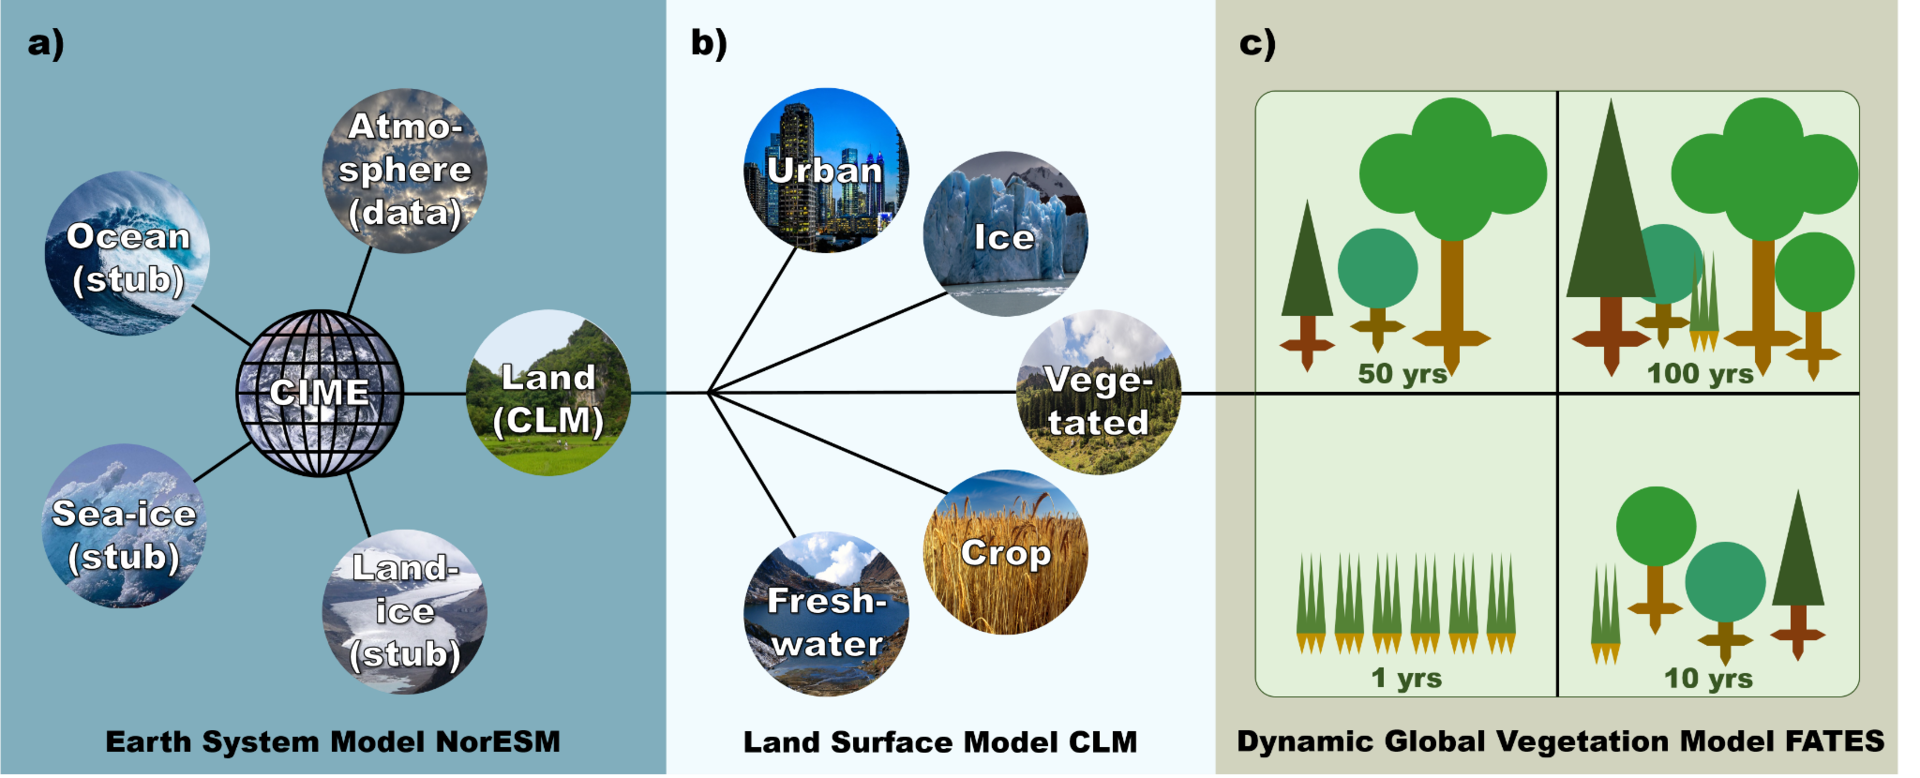 Model structure of the ecosystem modelling platform